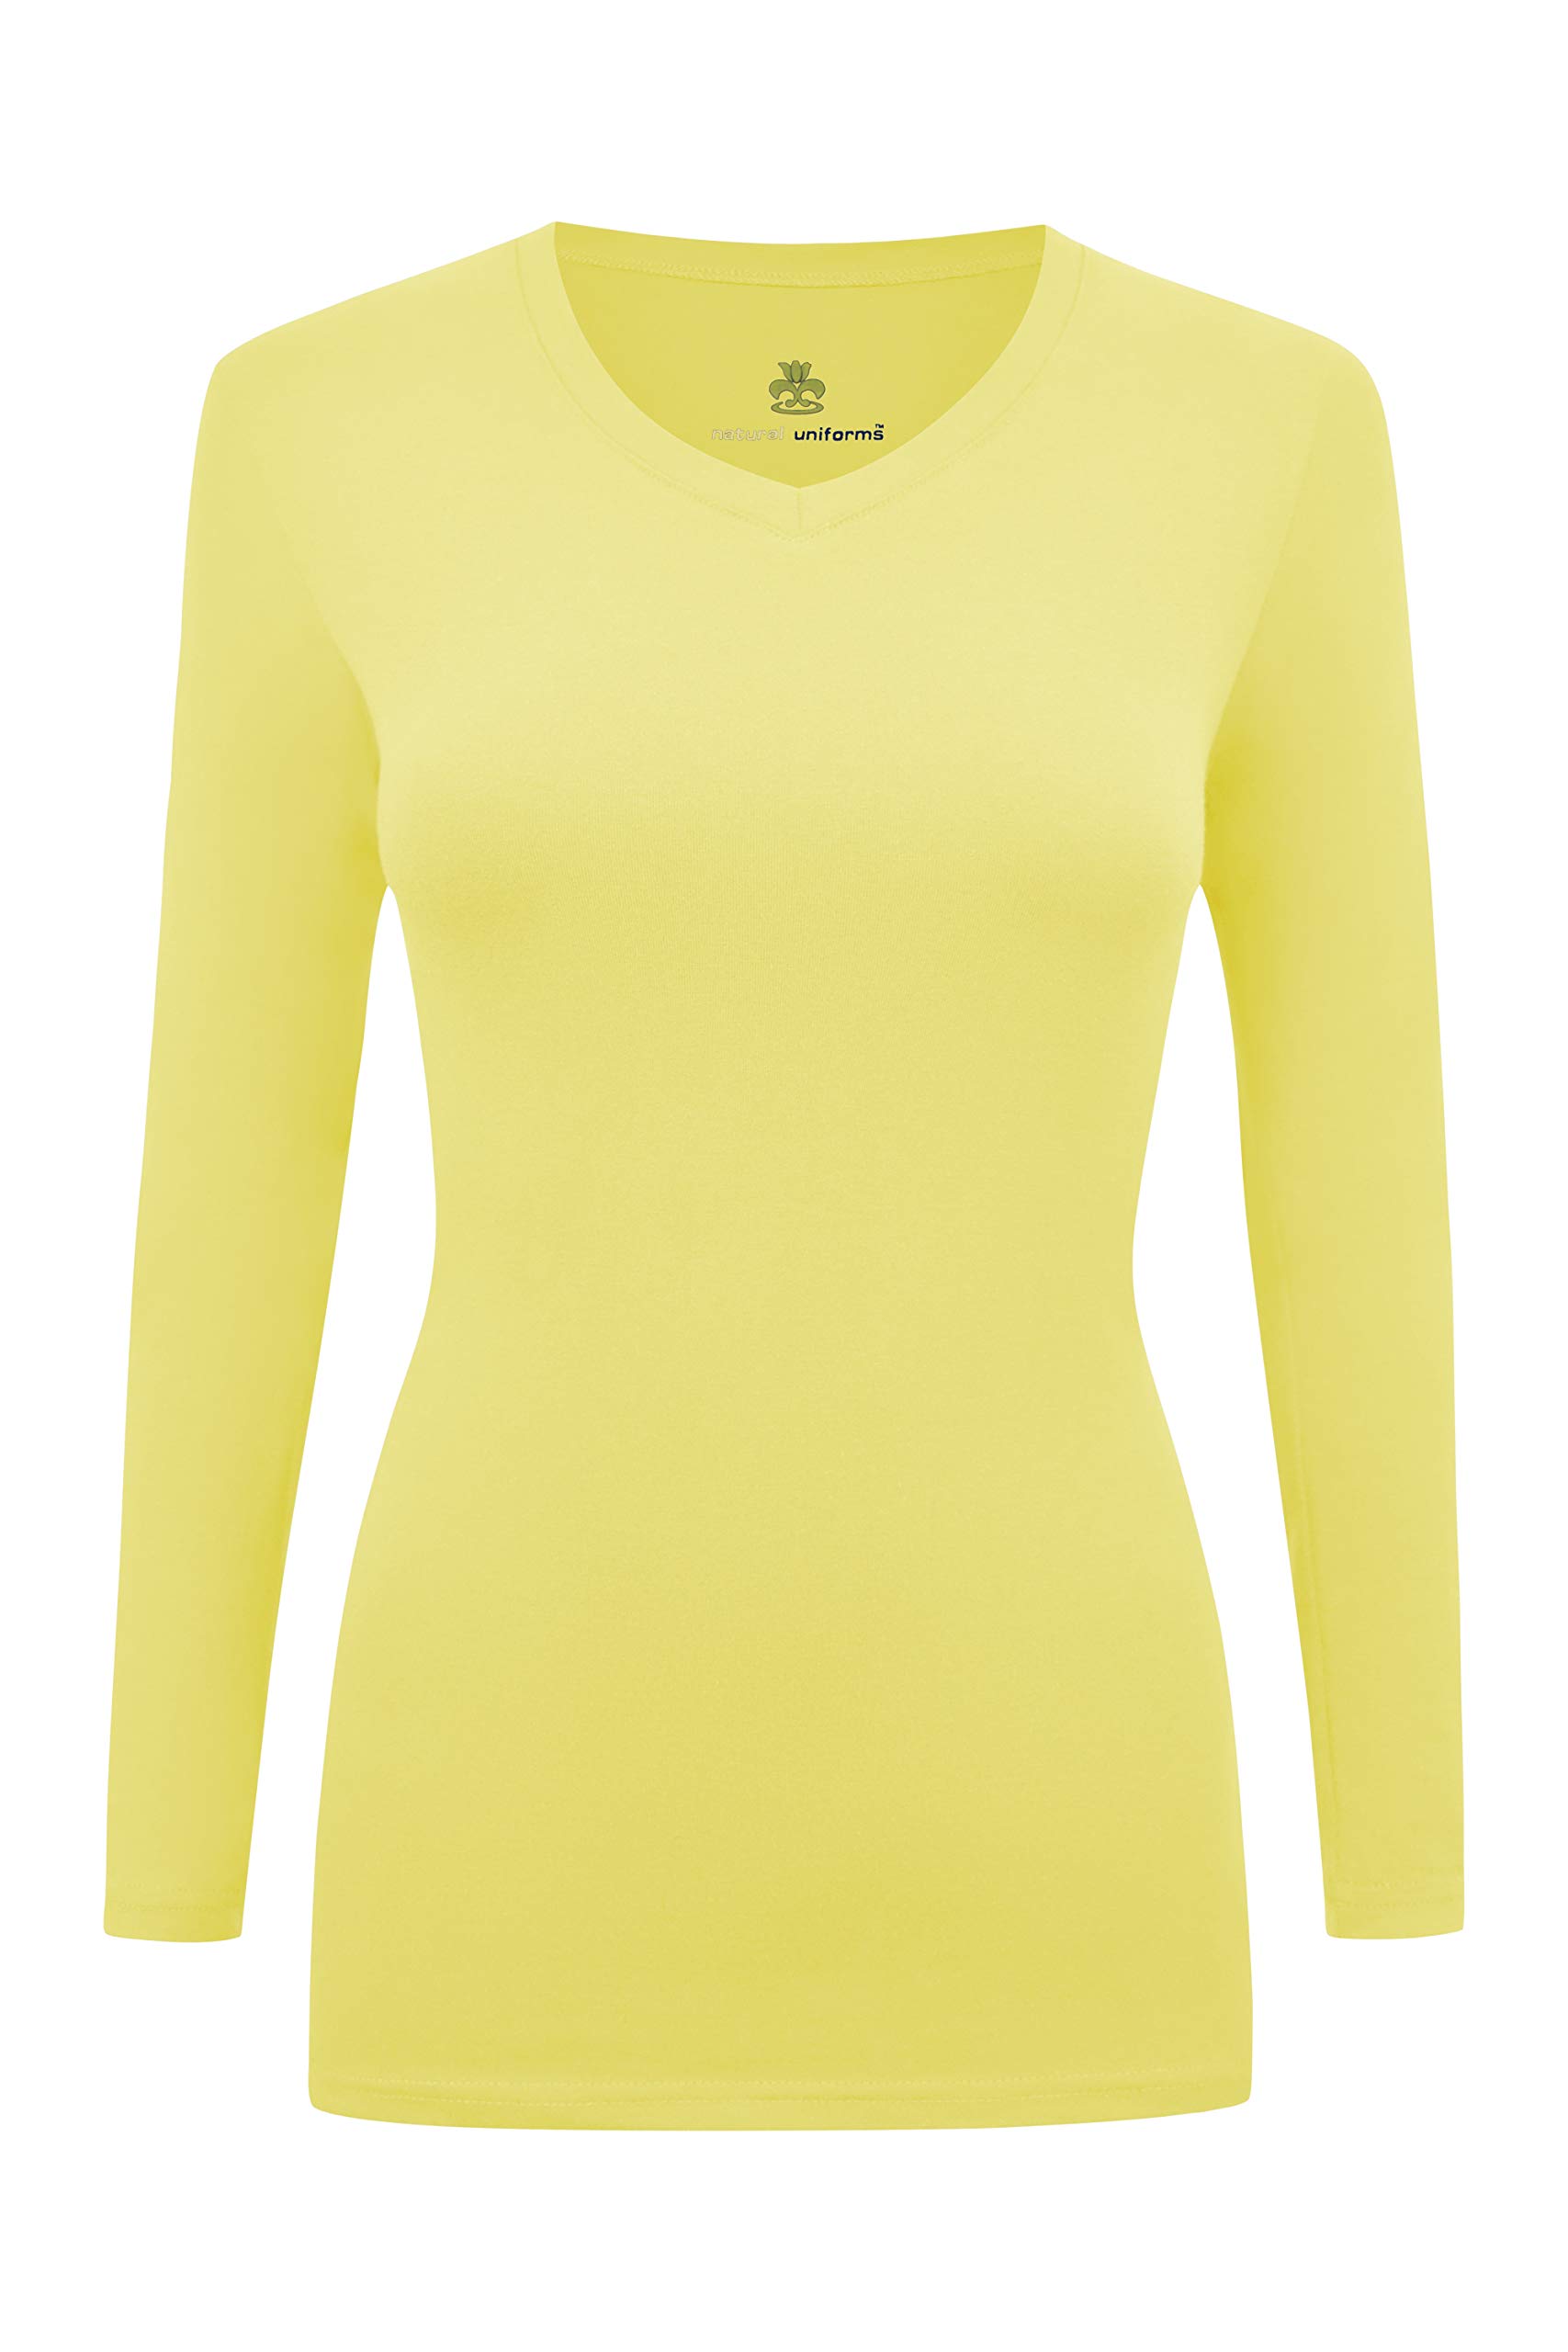 Natural Uniforms Womens Long Sleeve V-Neck T-Shirt Under Scrub (Yellow, Large)